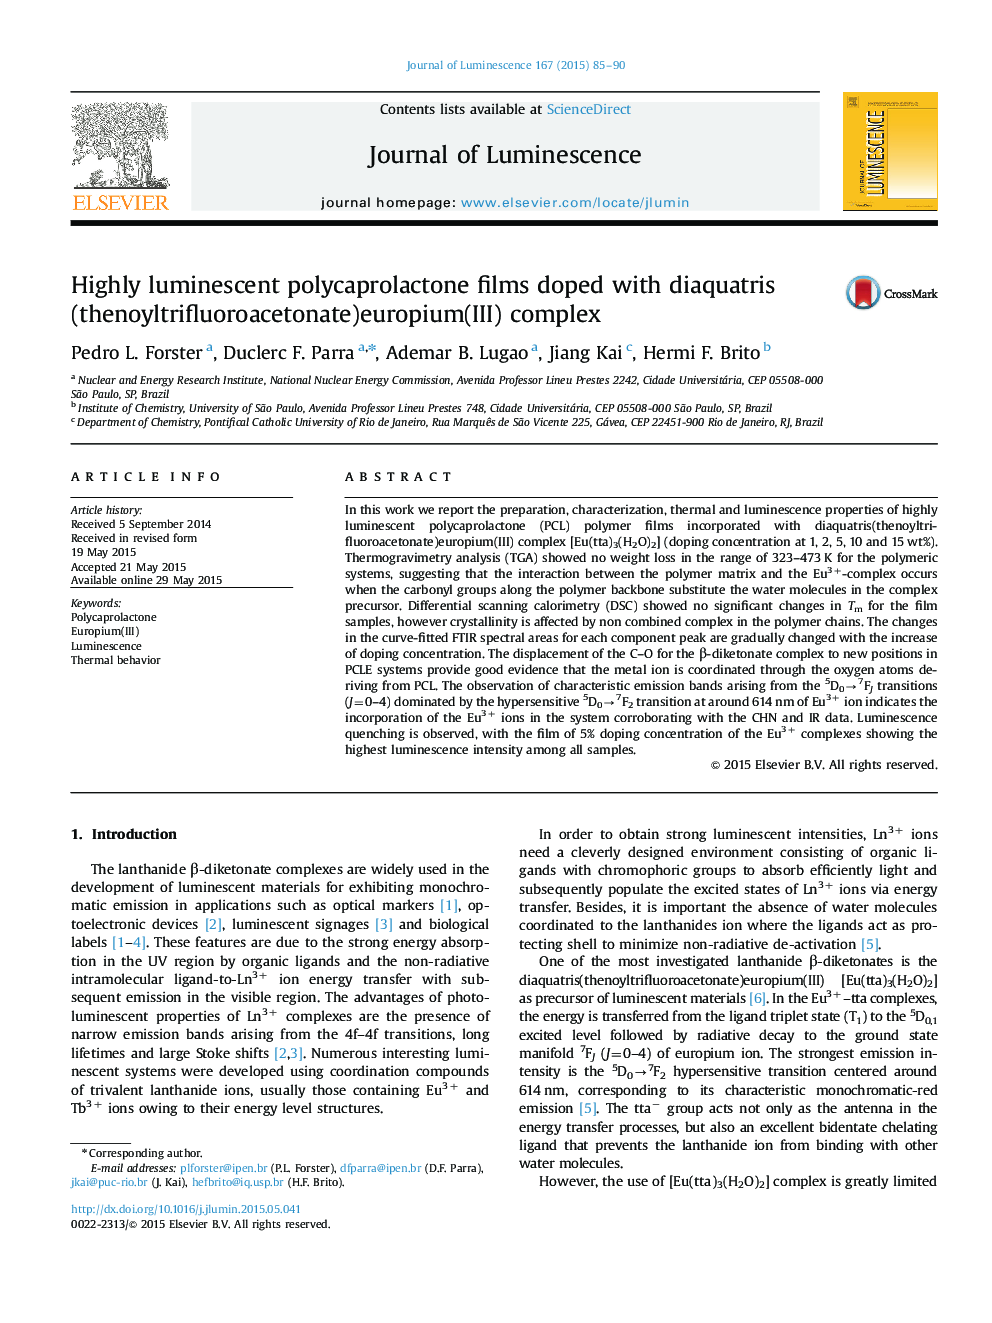 Highly luminescent polycaprolactone films doped with diaquatris(thenoyltrifluoroacetonate)europium(III) complex